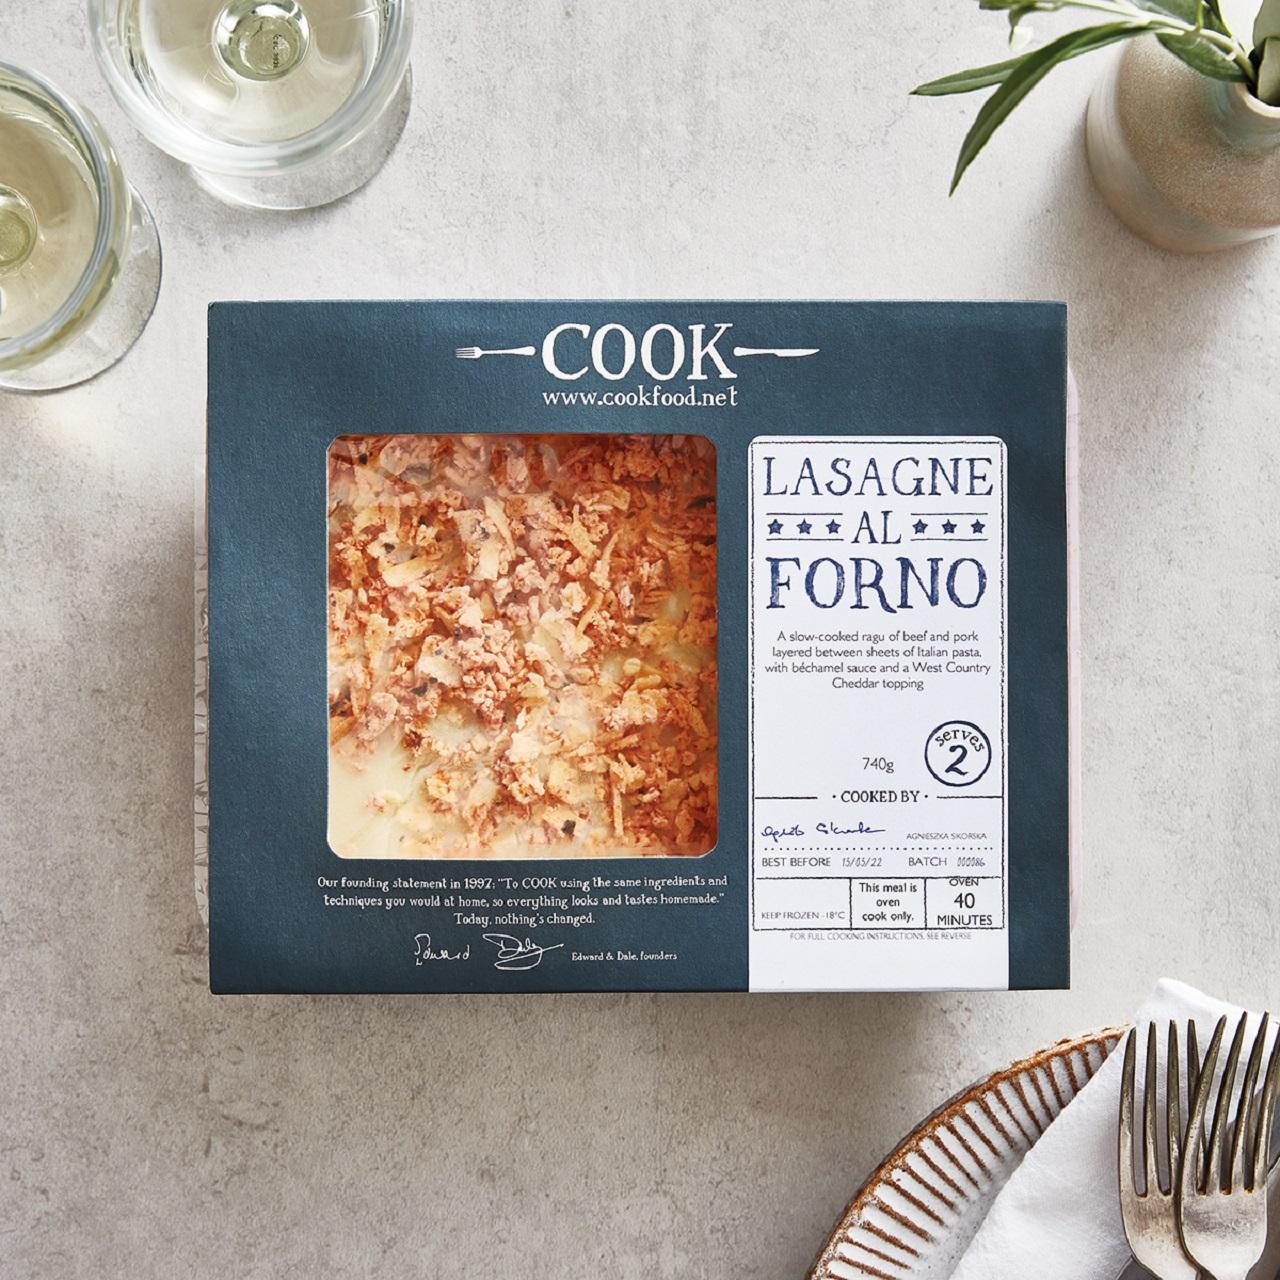 COOK Lasagne al Forno 740g